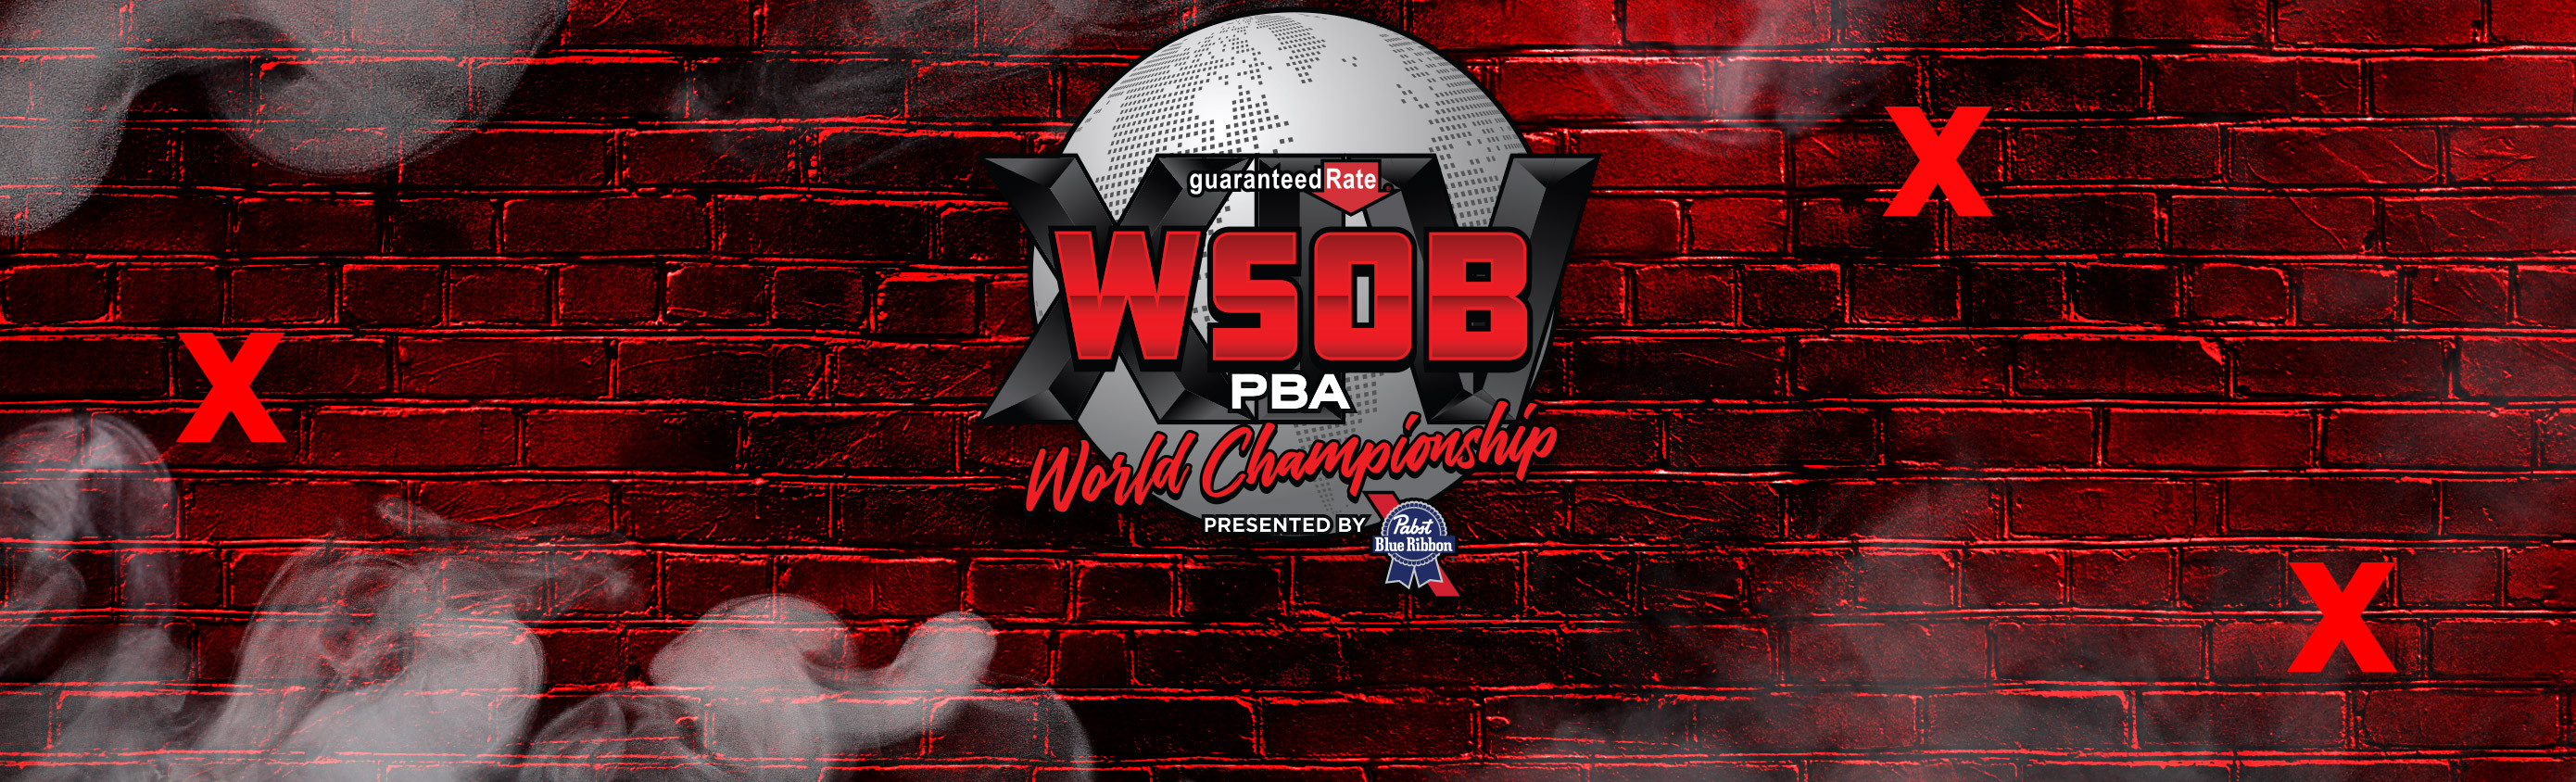 Guaranteed Rate PBA World Championship presented by Pabst Blue Ribbon PBA